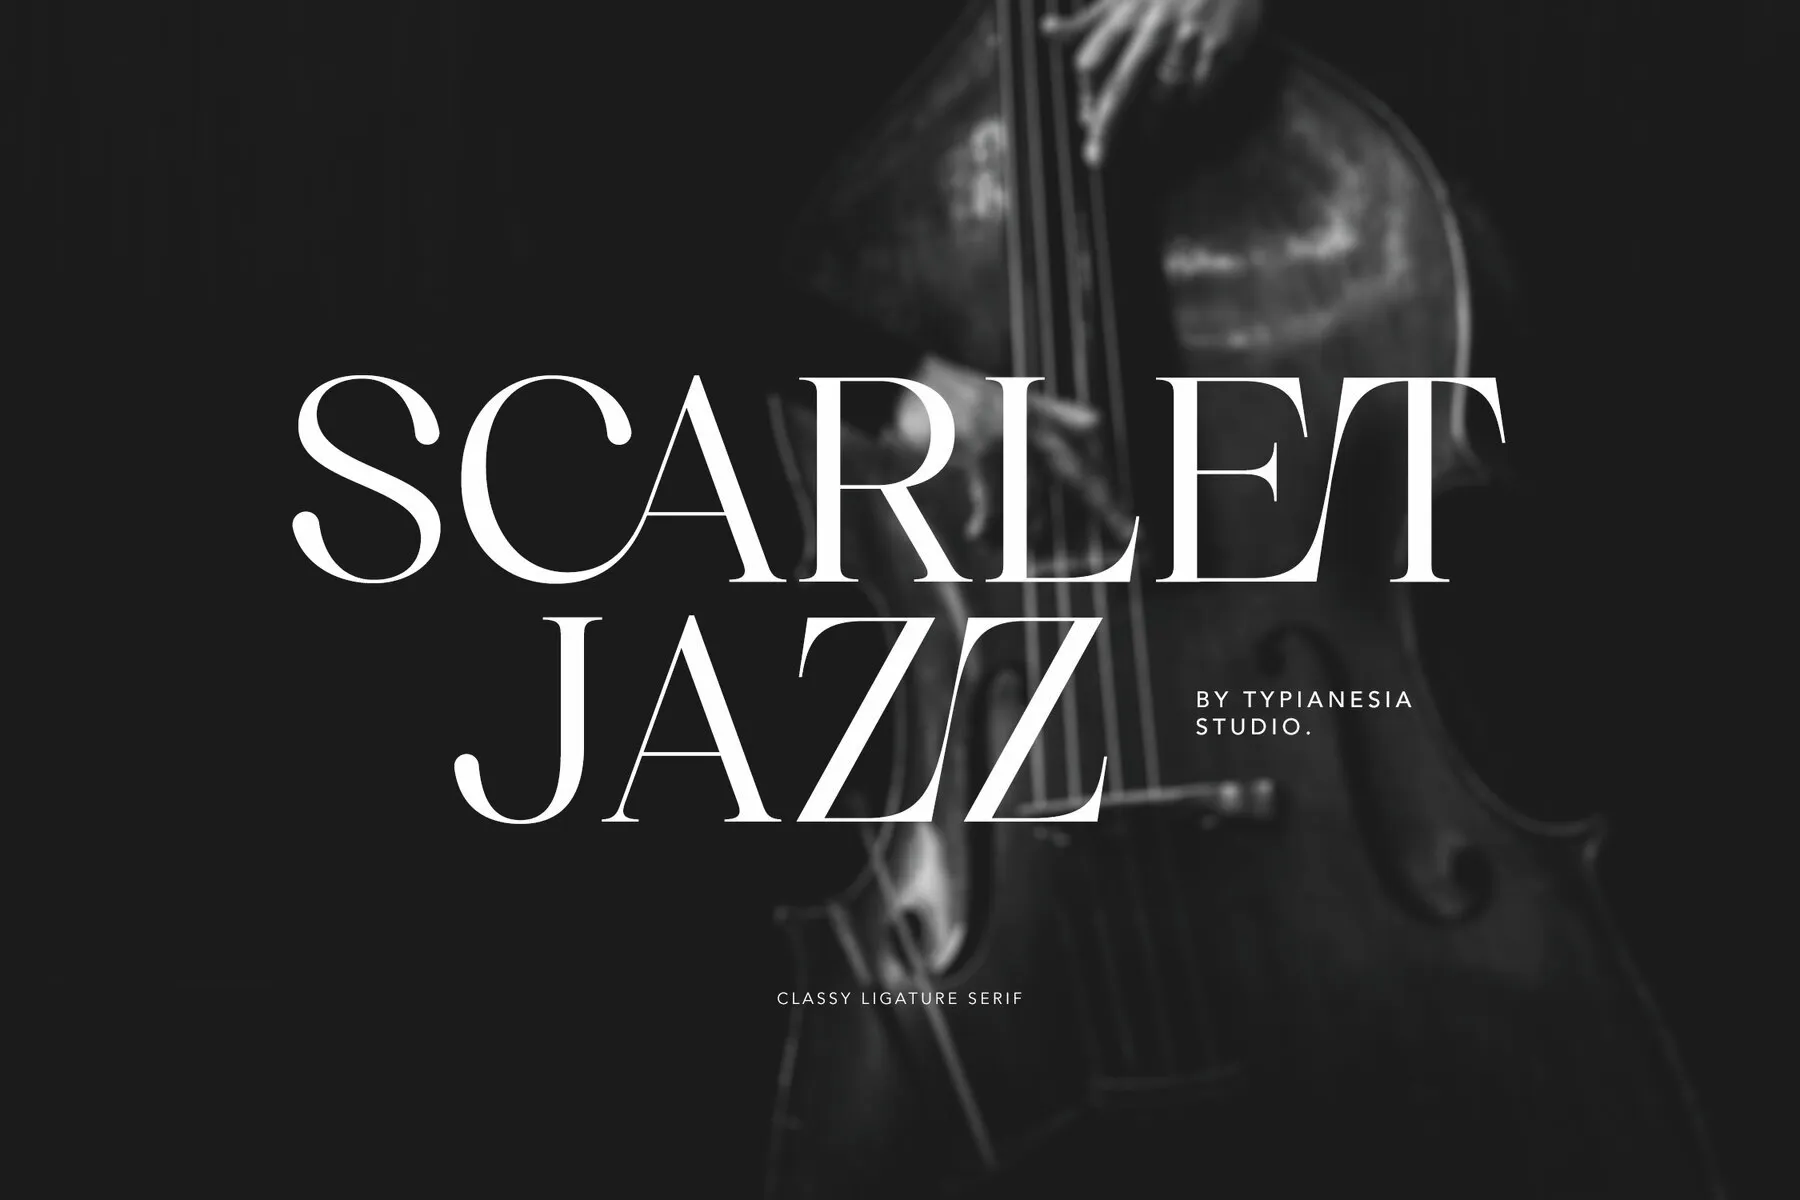 Scarlet Jazz